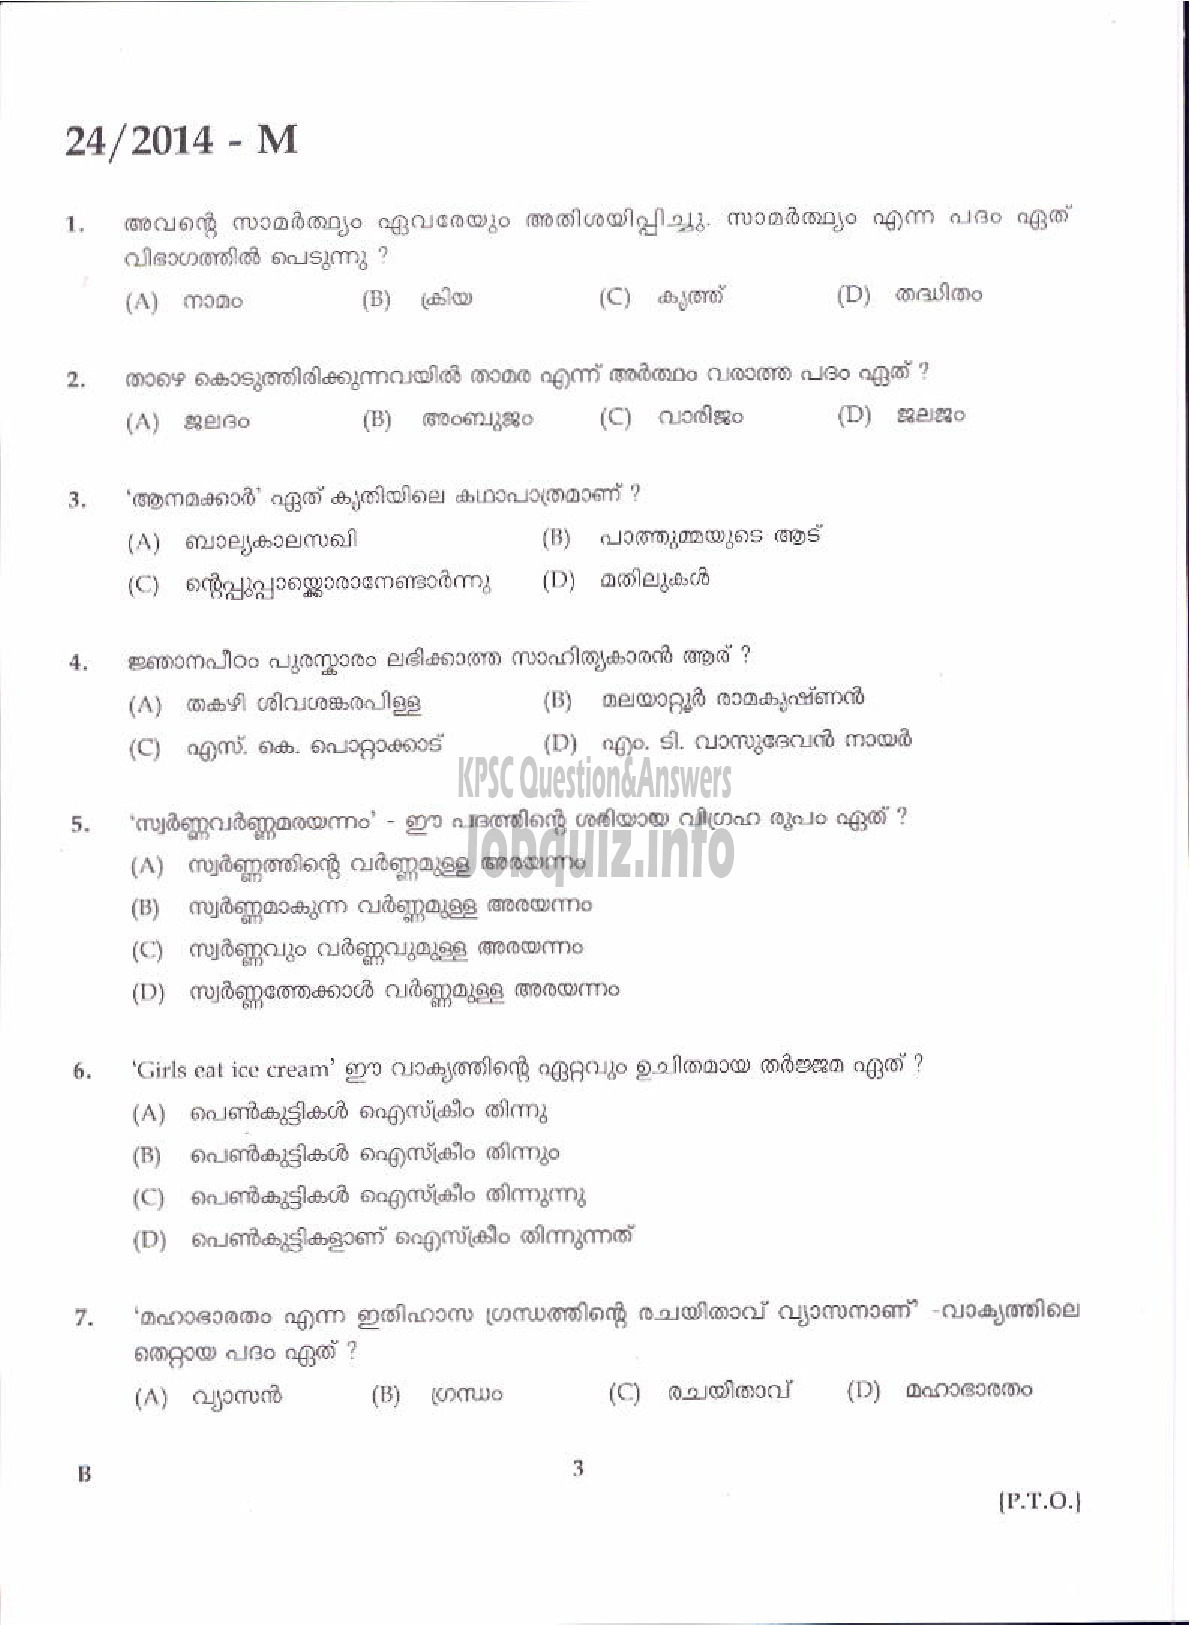 Kerala PSC Question Paper - LOWER DIVISION CLERK VARIOUS 2014 MALAPPURAM ( Malayalam ) -1